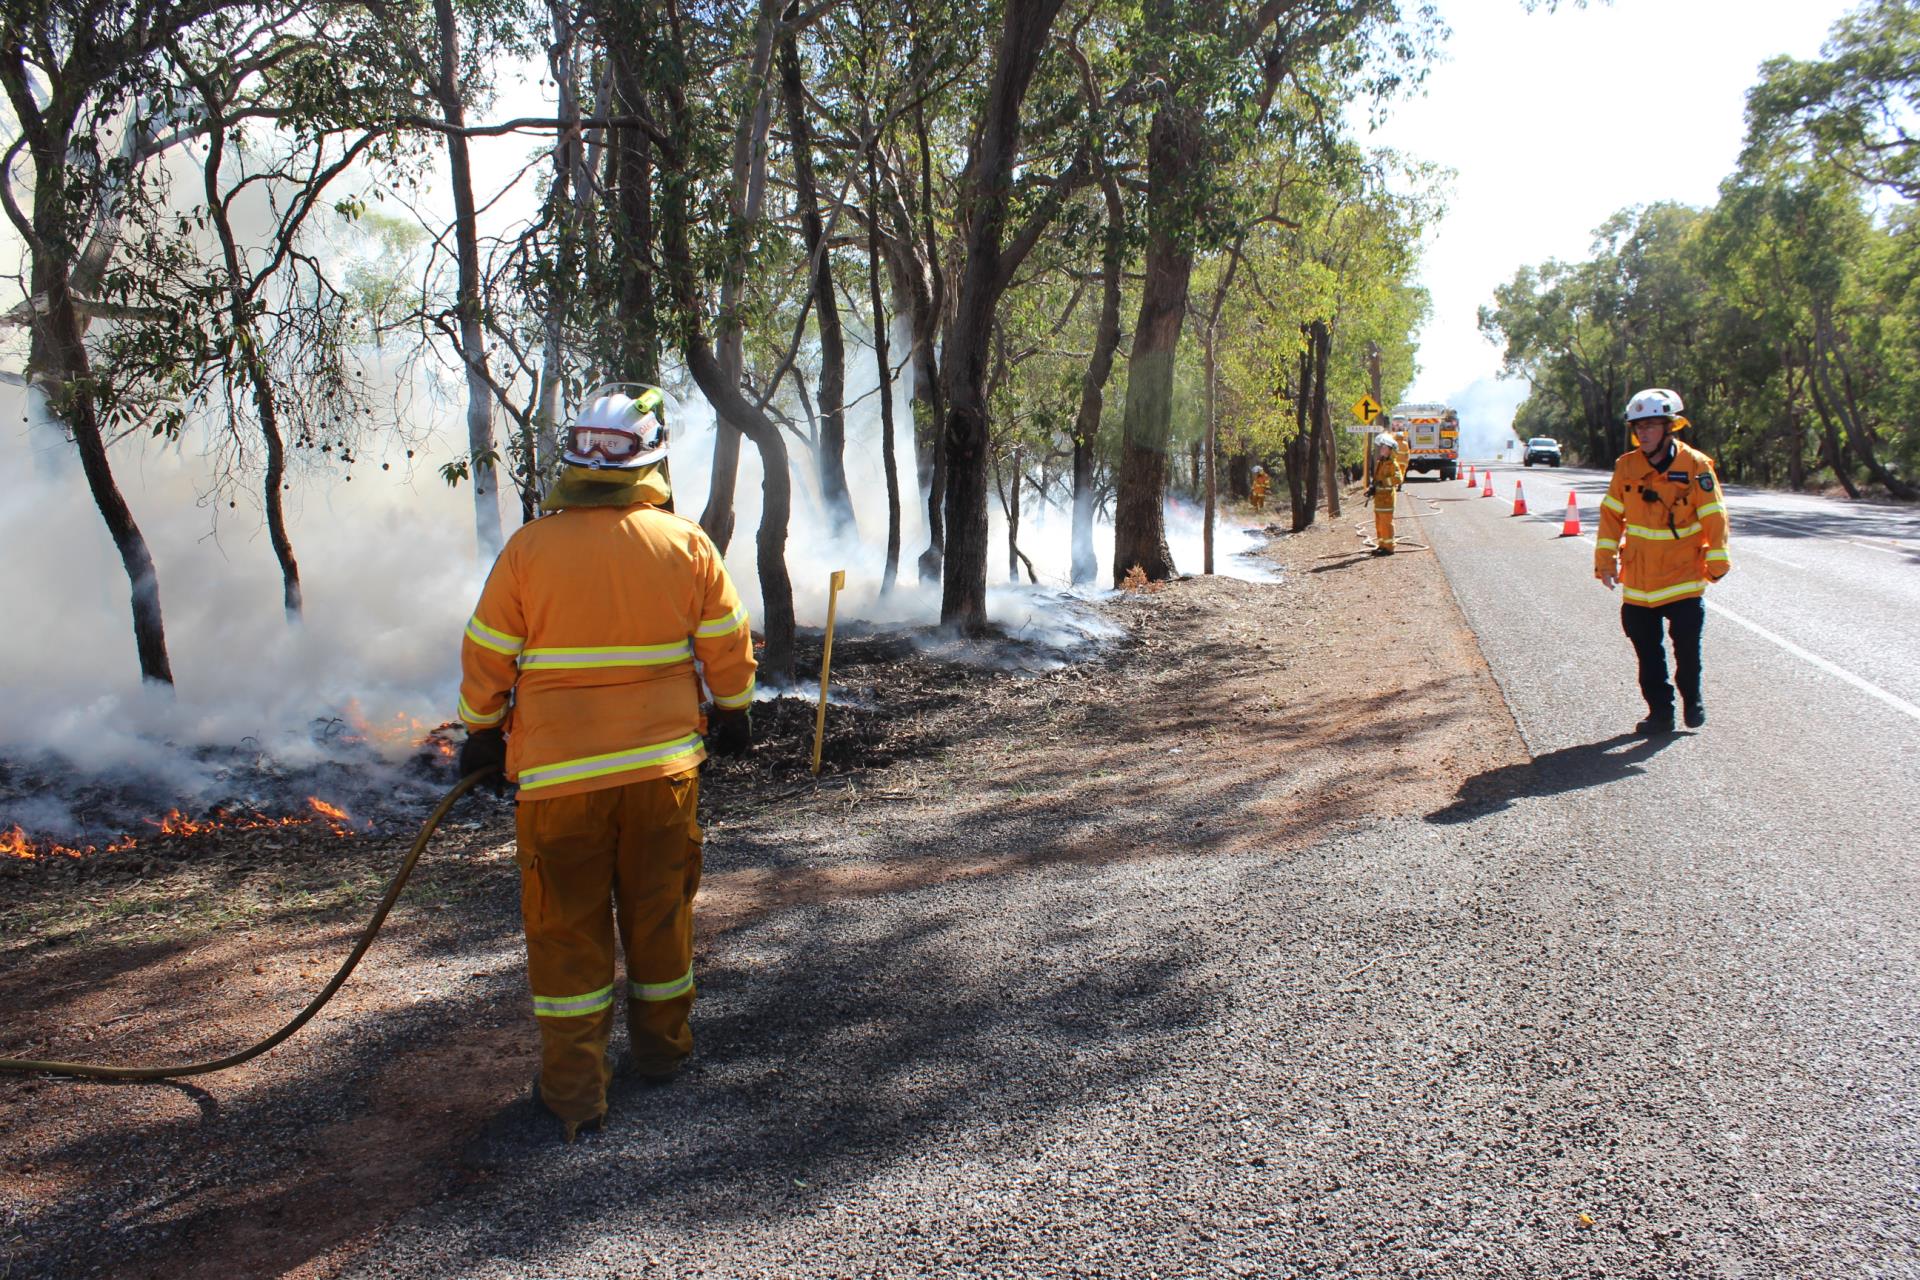 Rapids Road upgrades and bushfire mitigation works